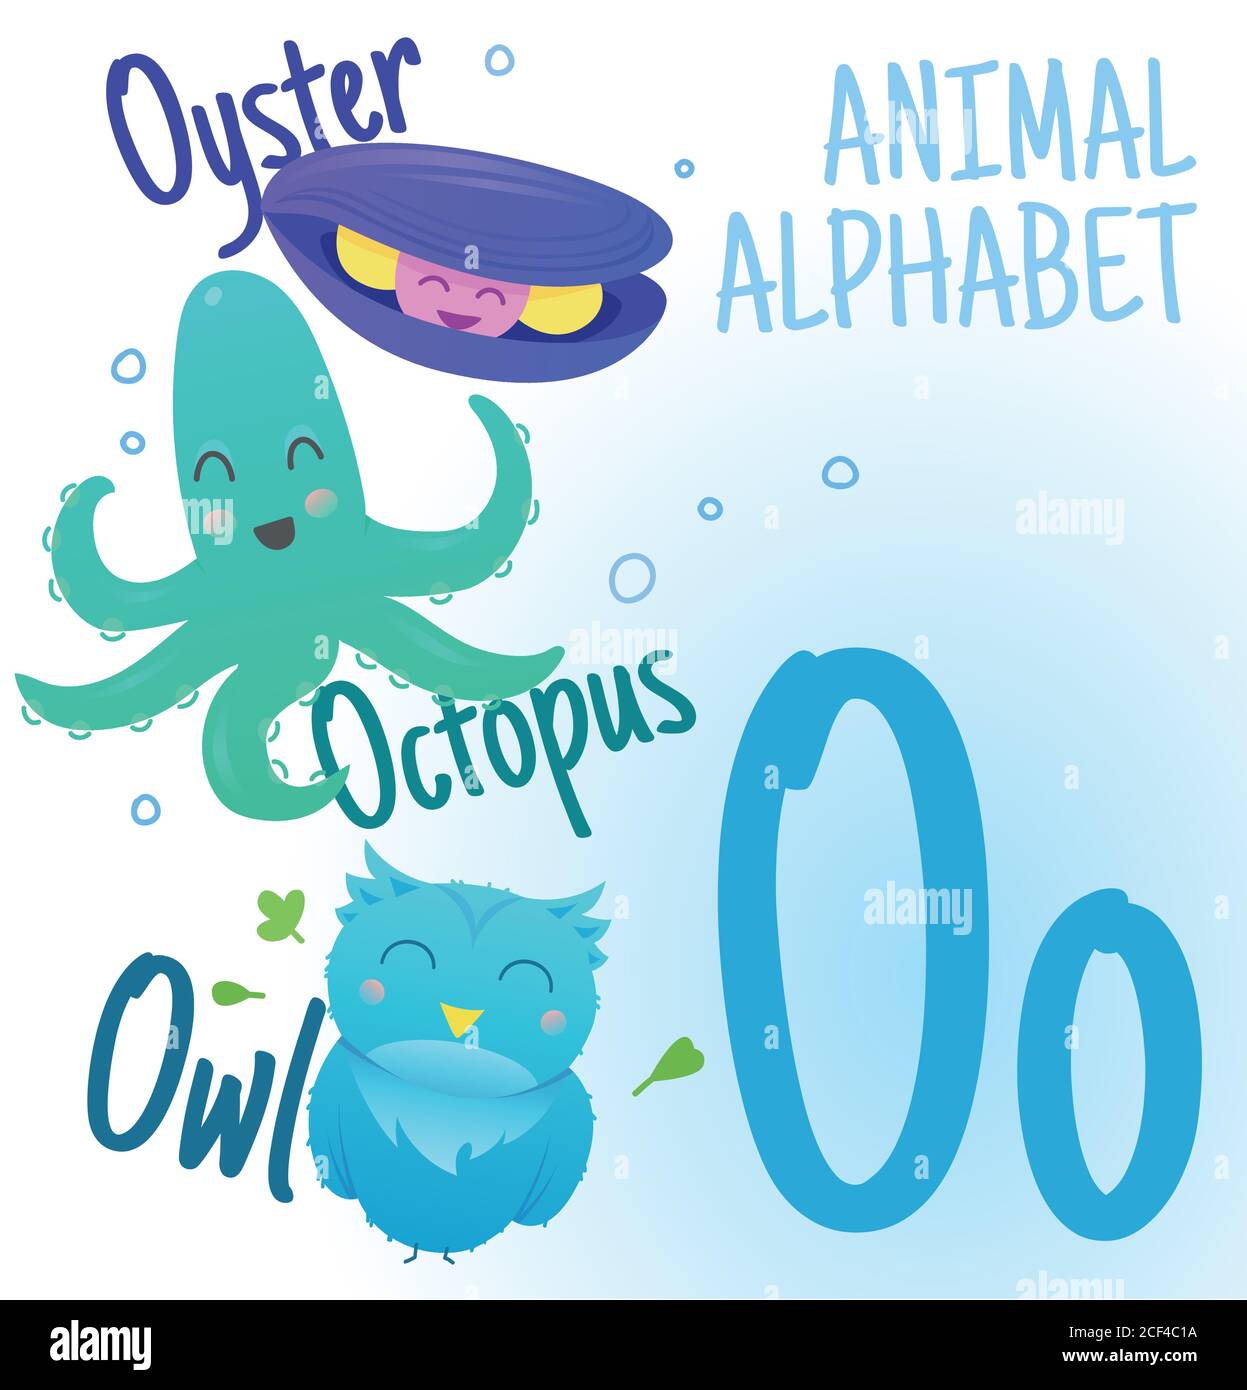 Animal alphabet in vector. O letter. Very cute cartoon animals Oyster, Octopus, Owl. Stock Vector